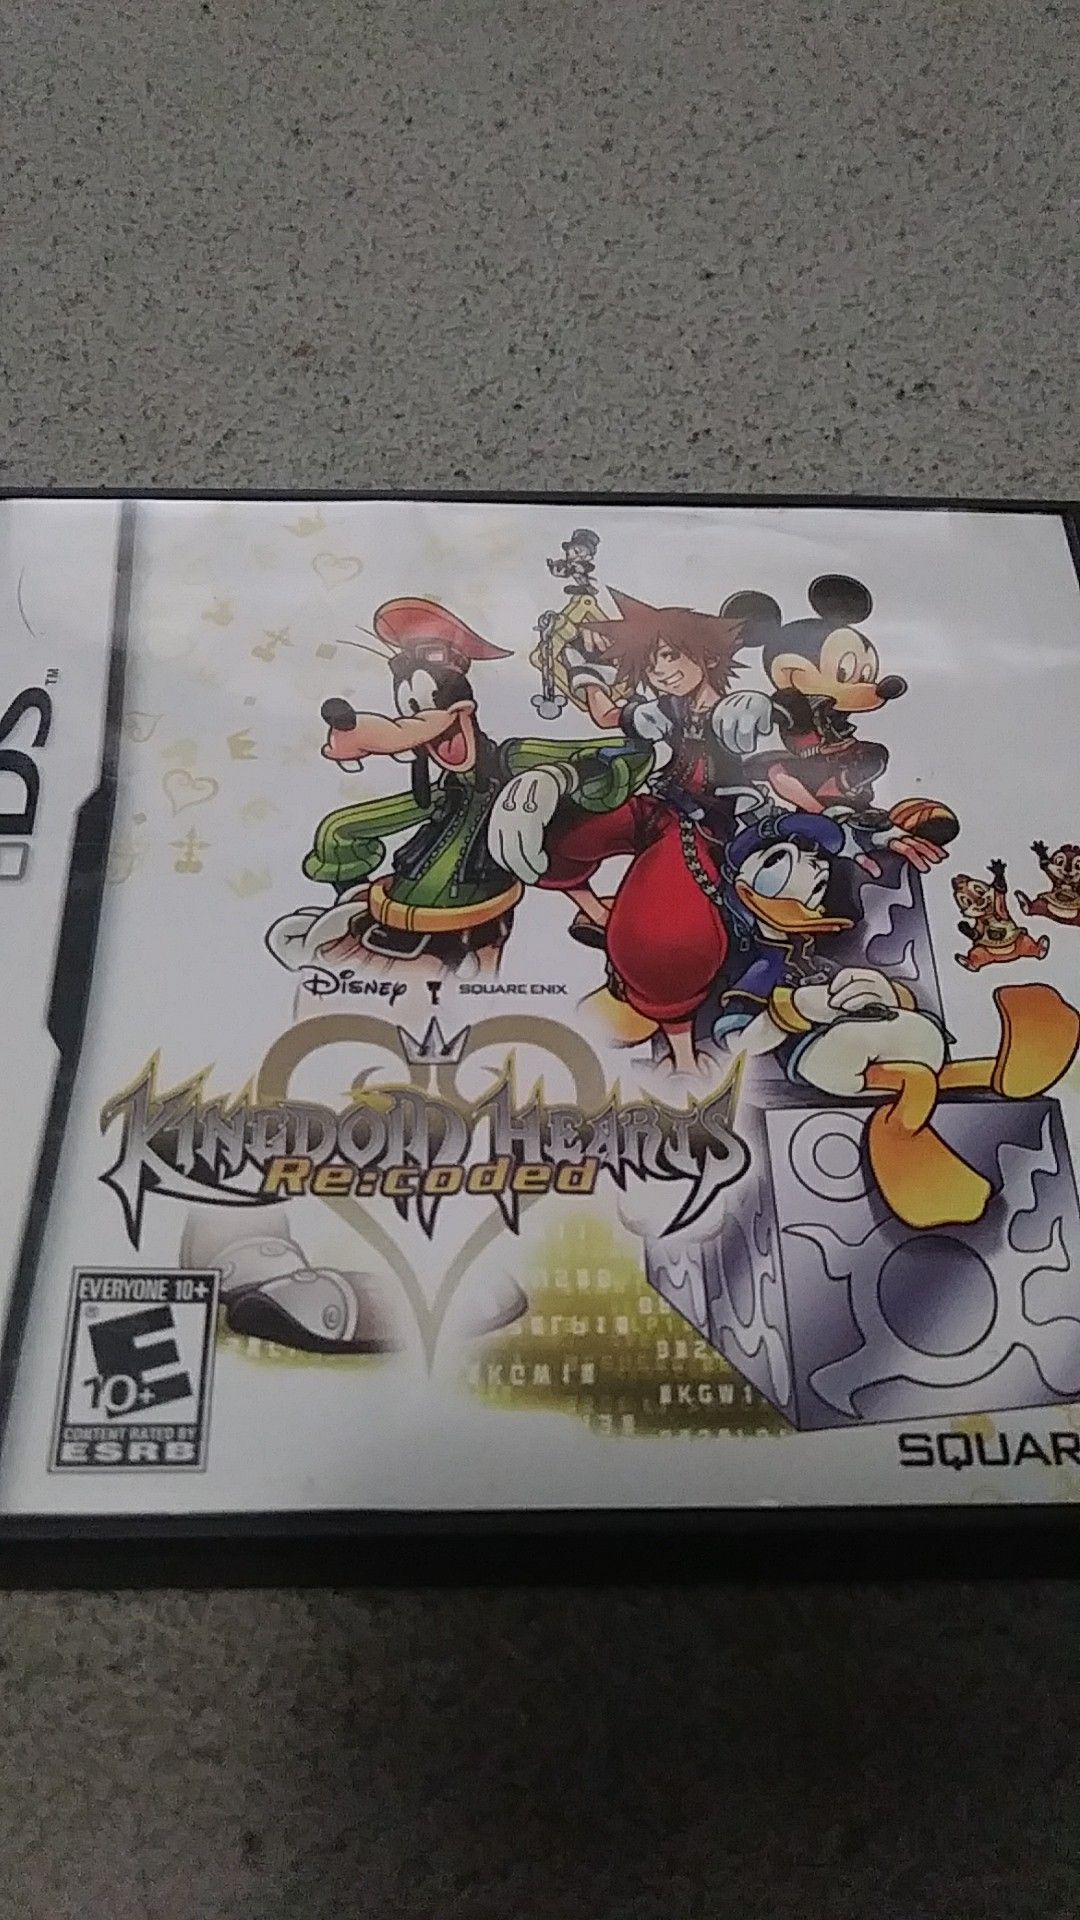 Kingdom Hearts Nintendo DS/3DS games